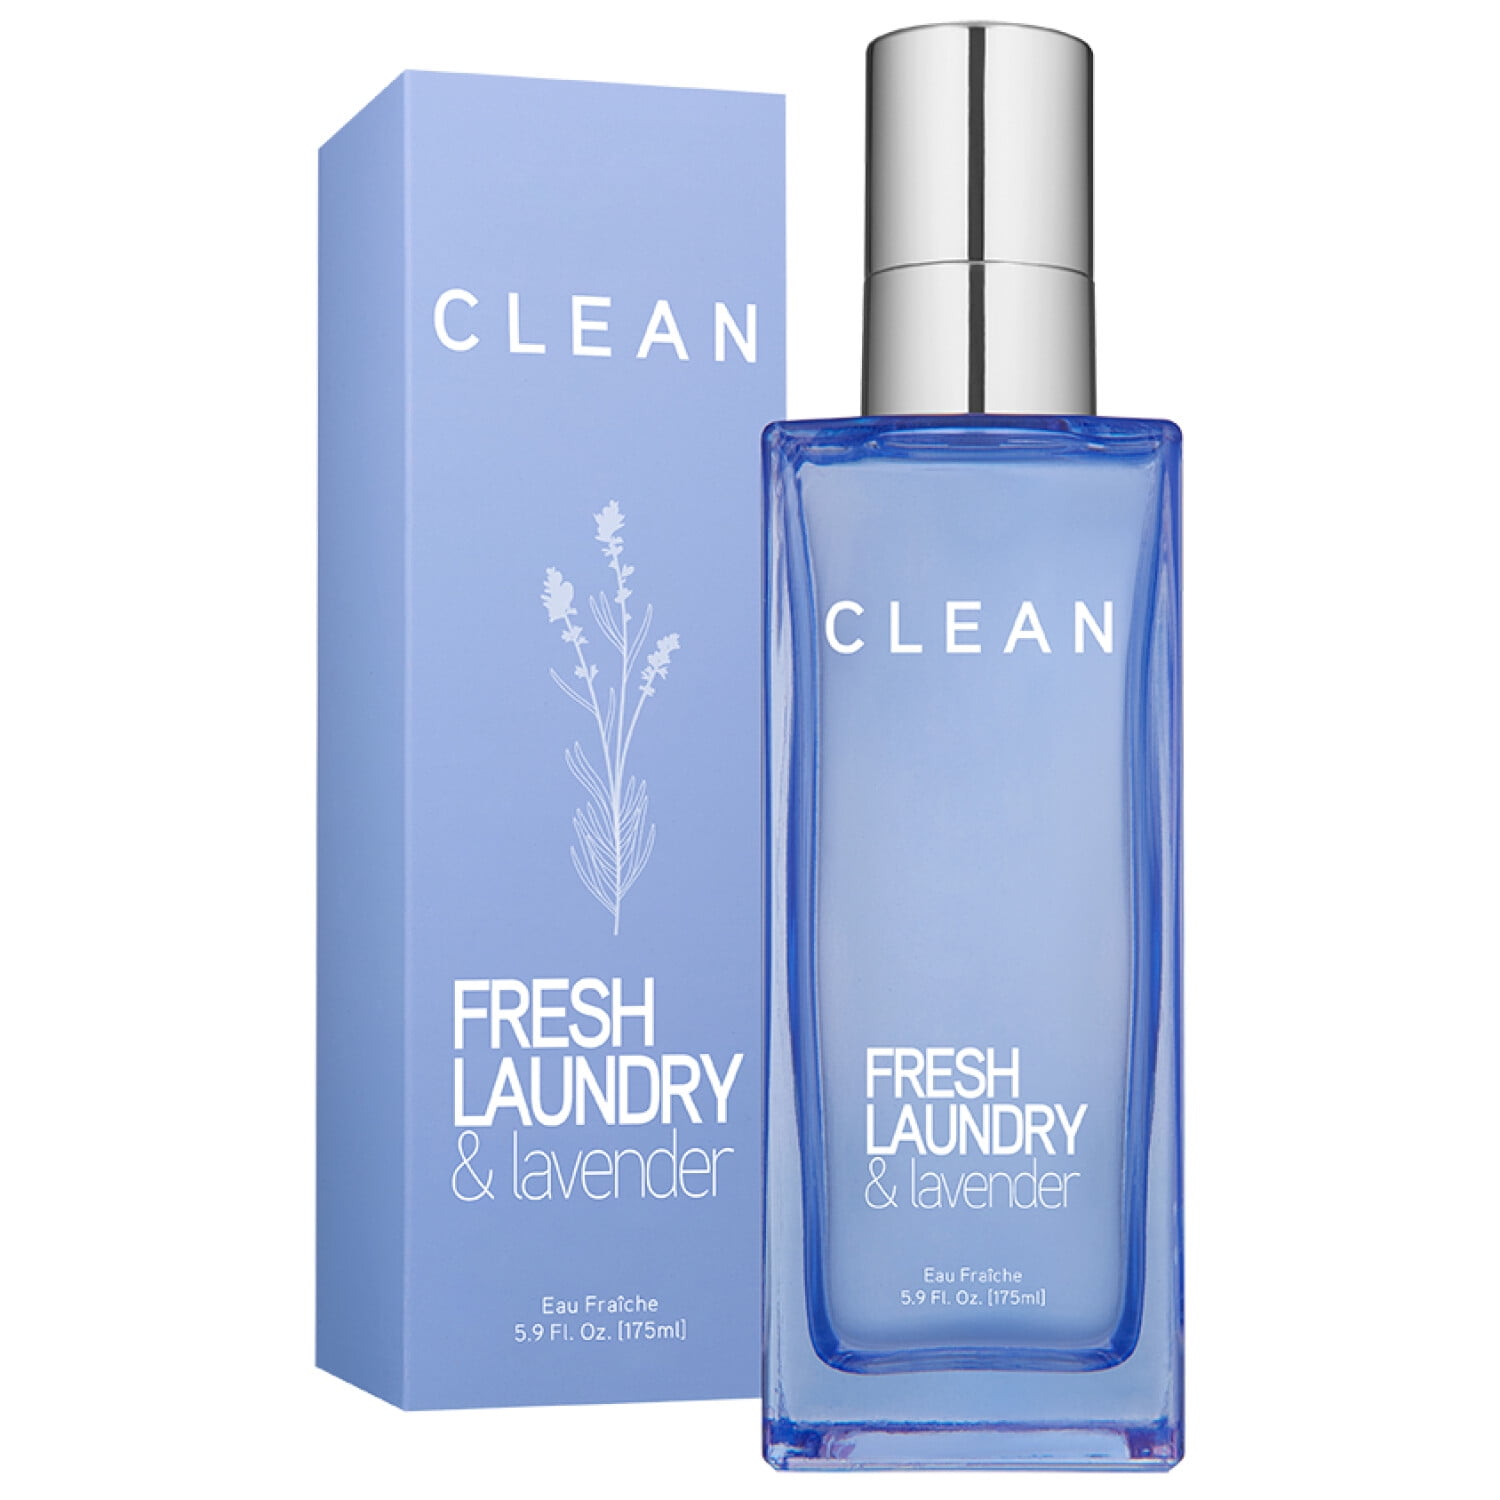 Abbey and sullivan fresh laundry scent